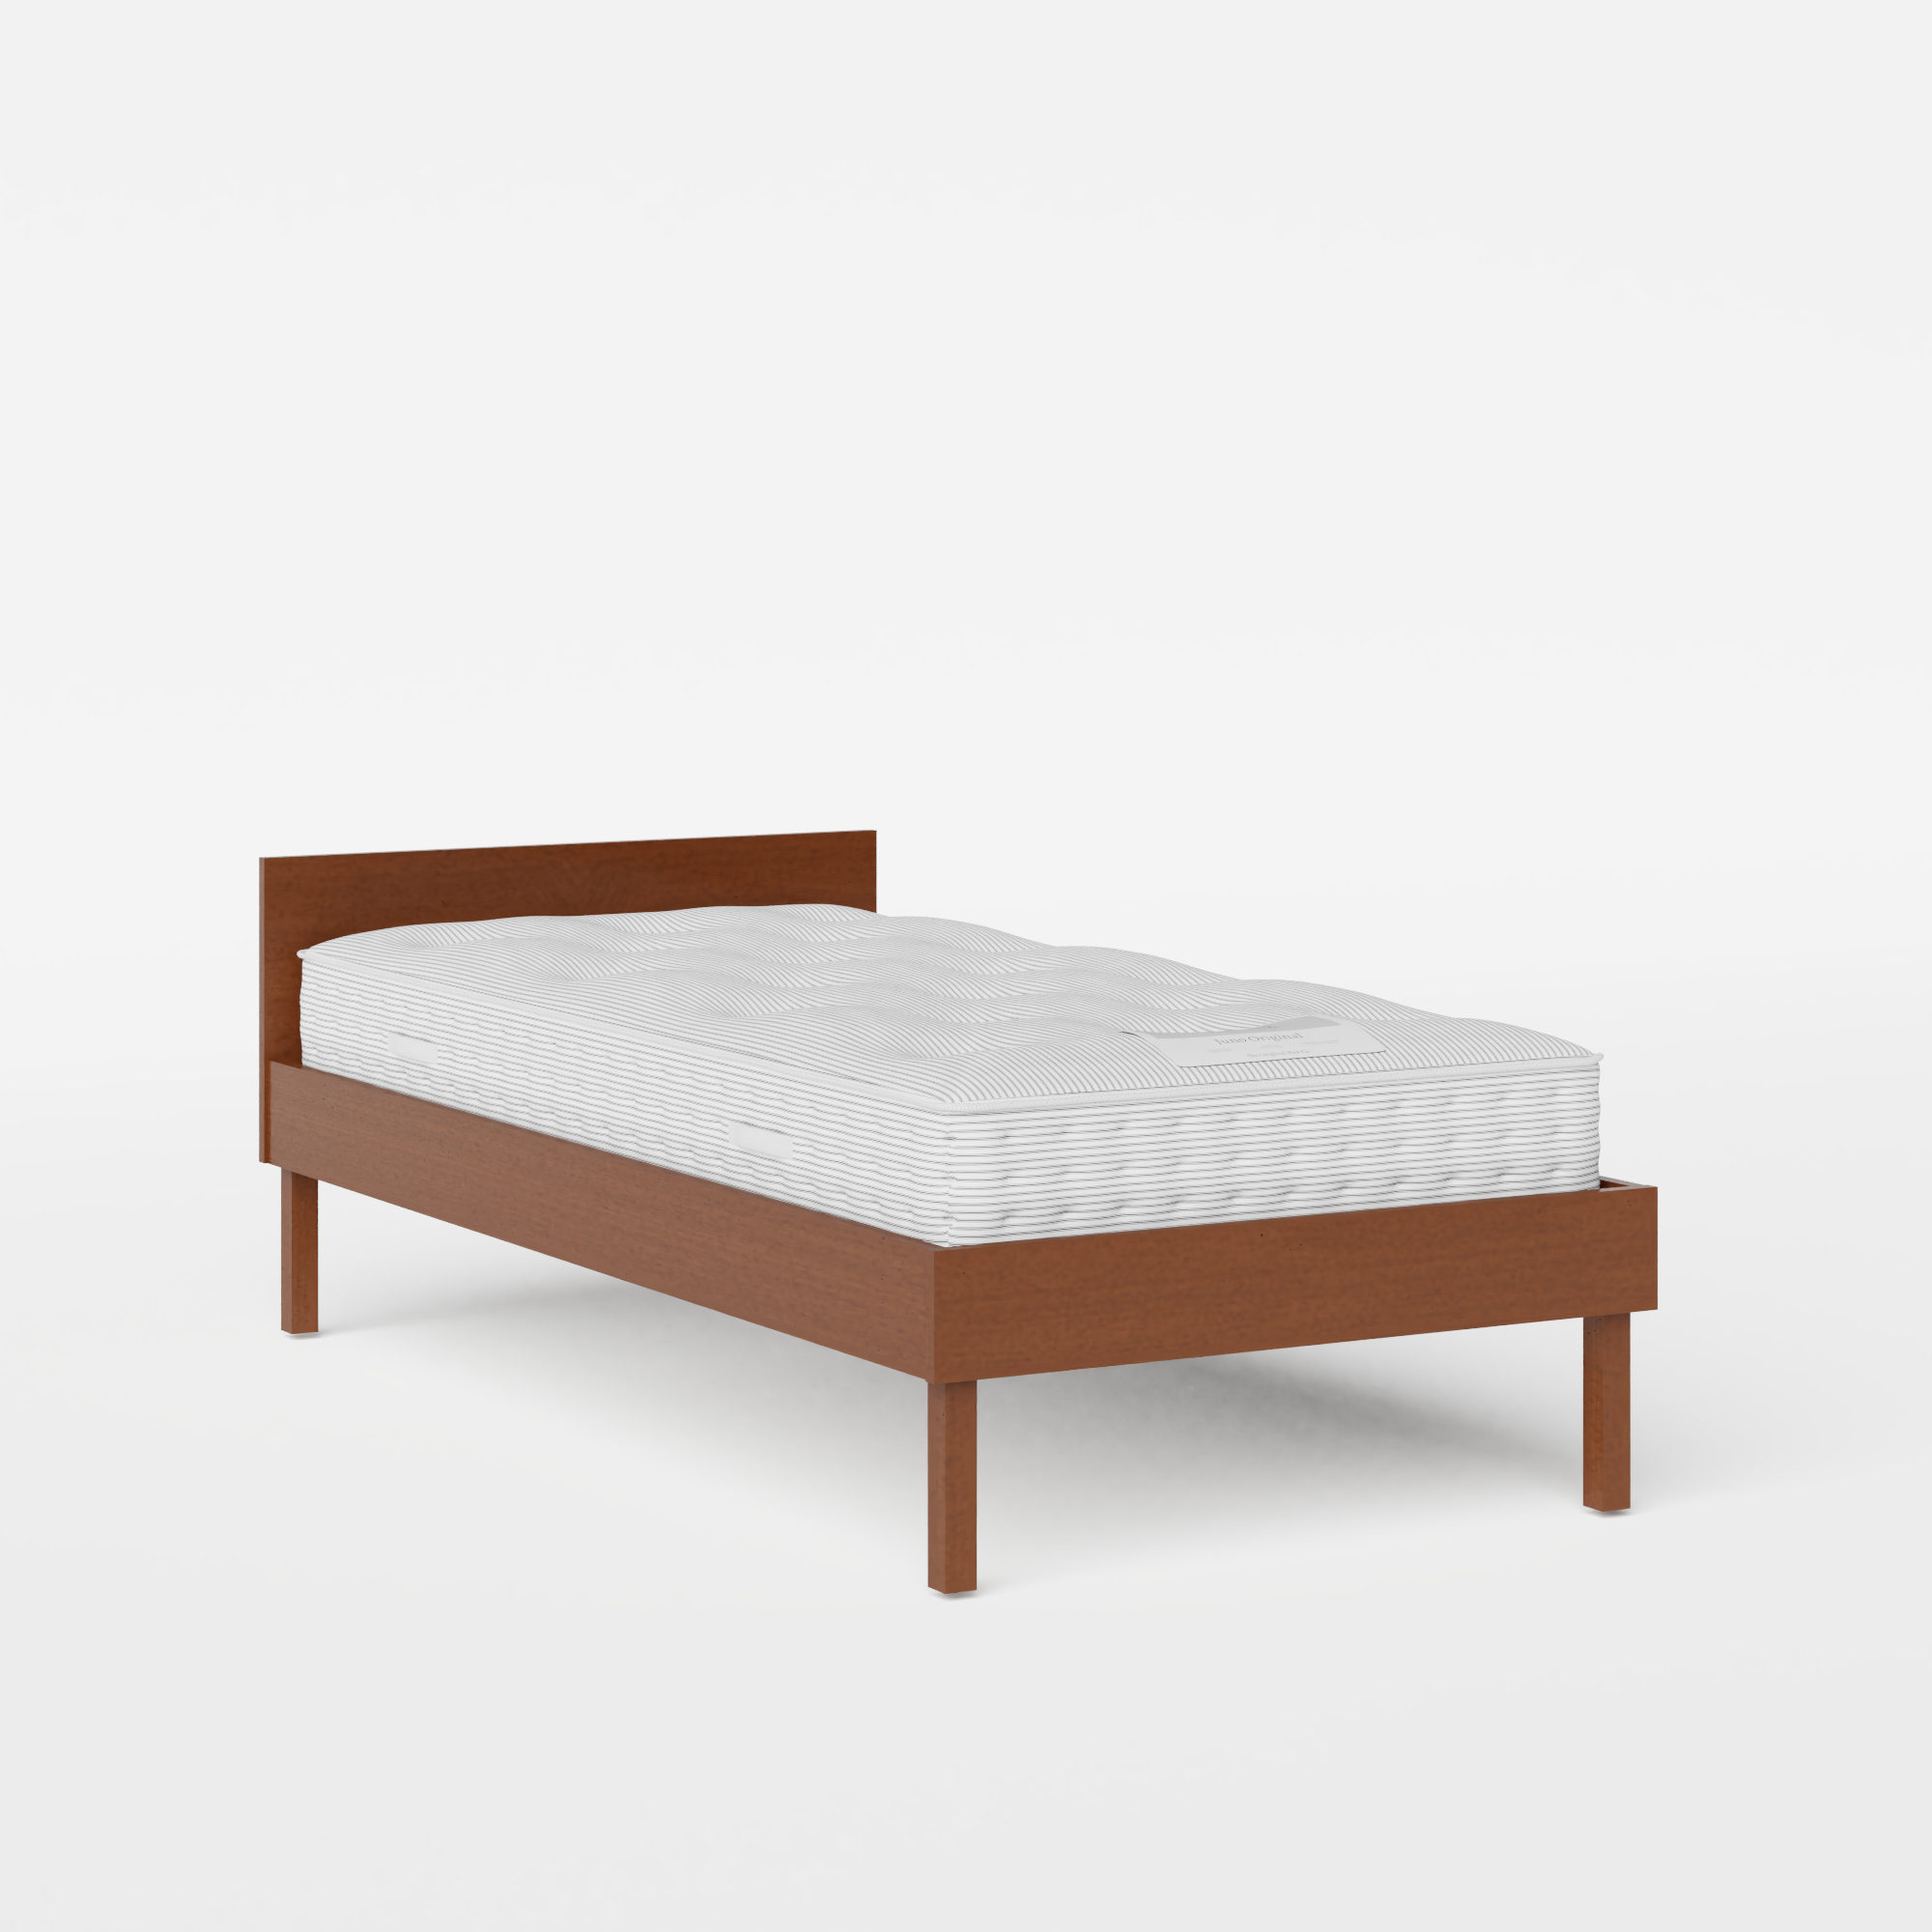 Fuji single wood bed in dark cherry with Juno mattress